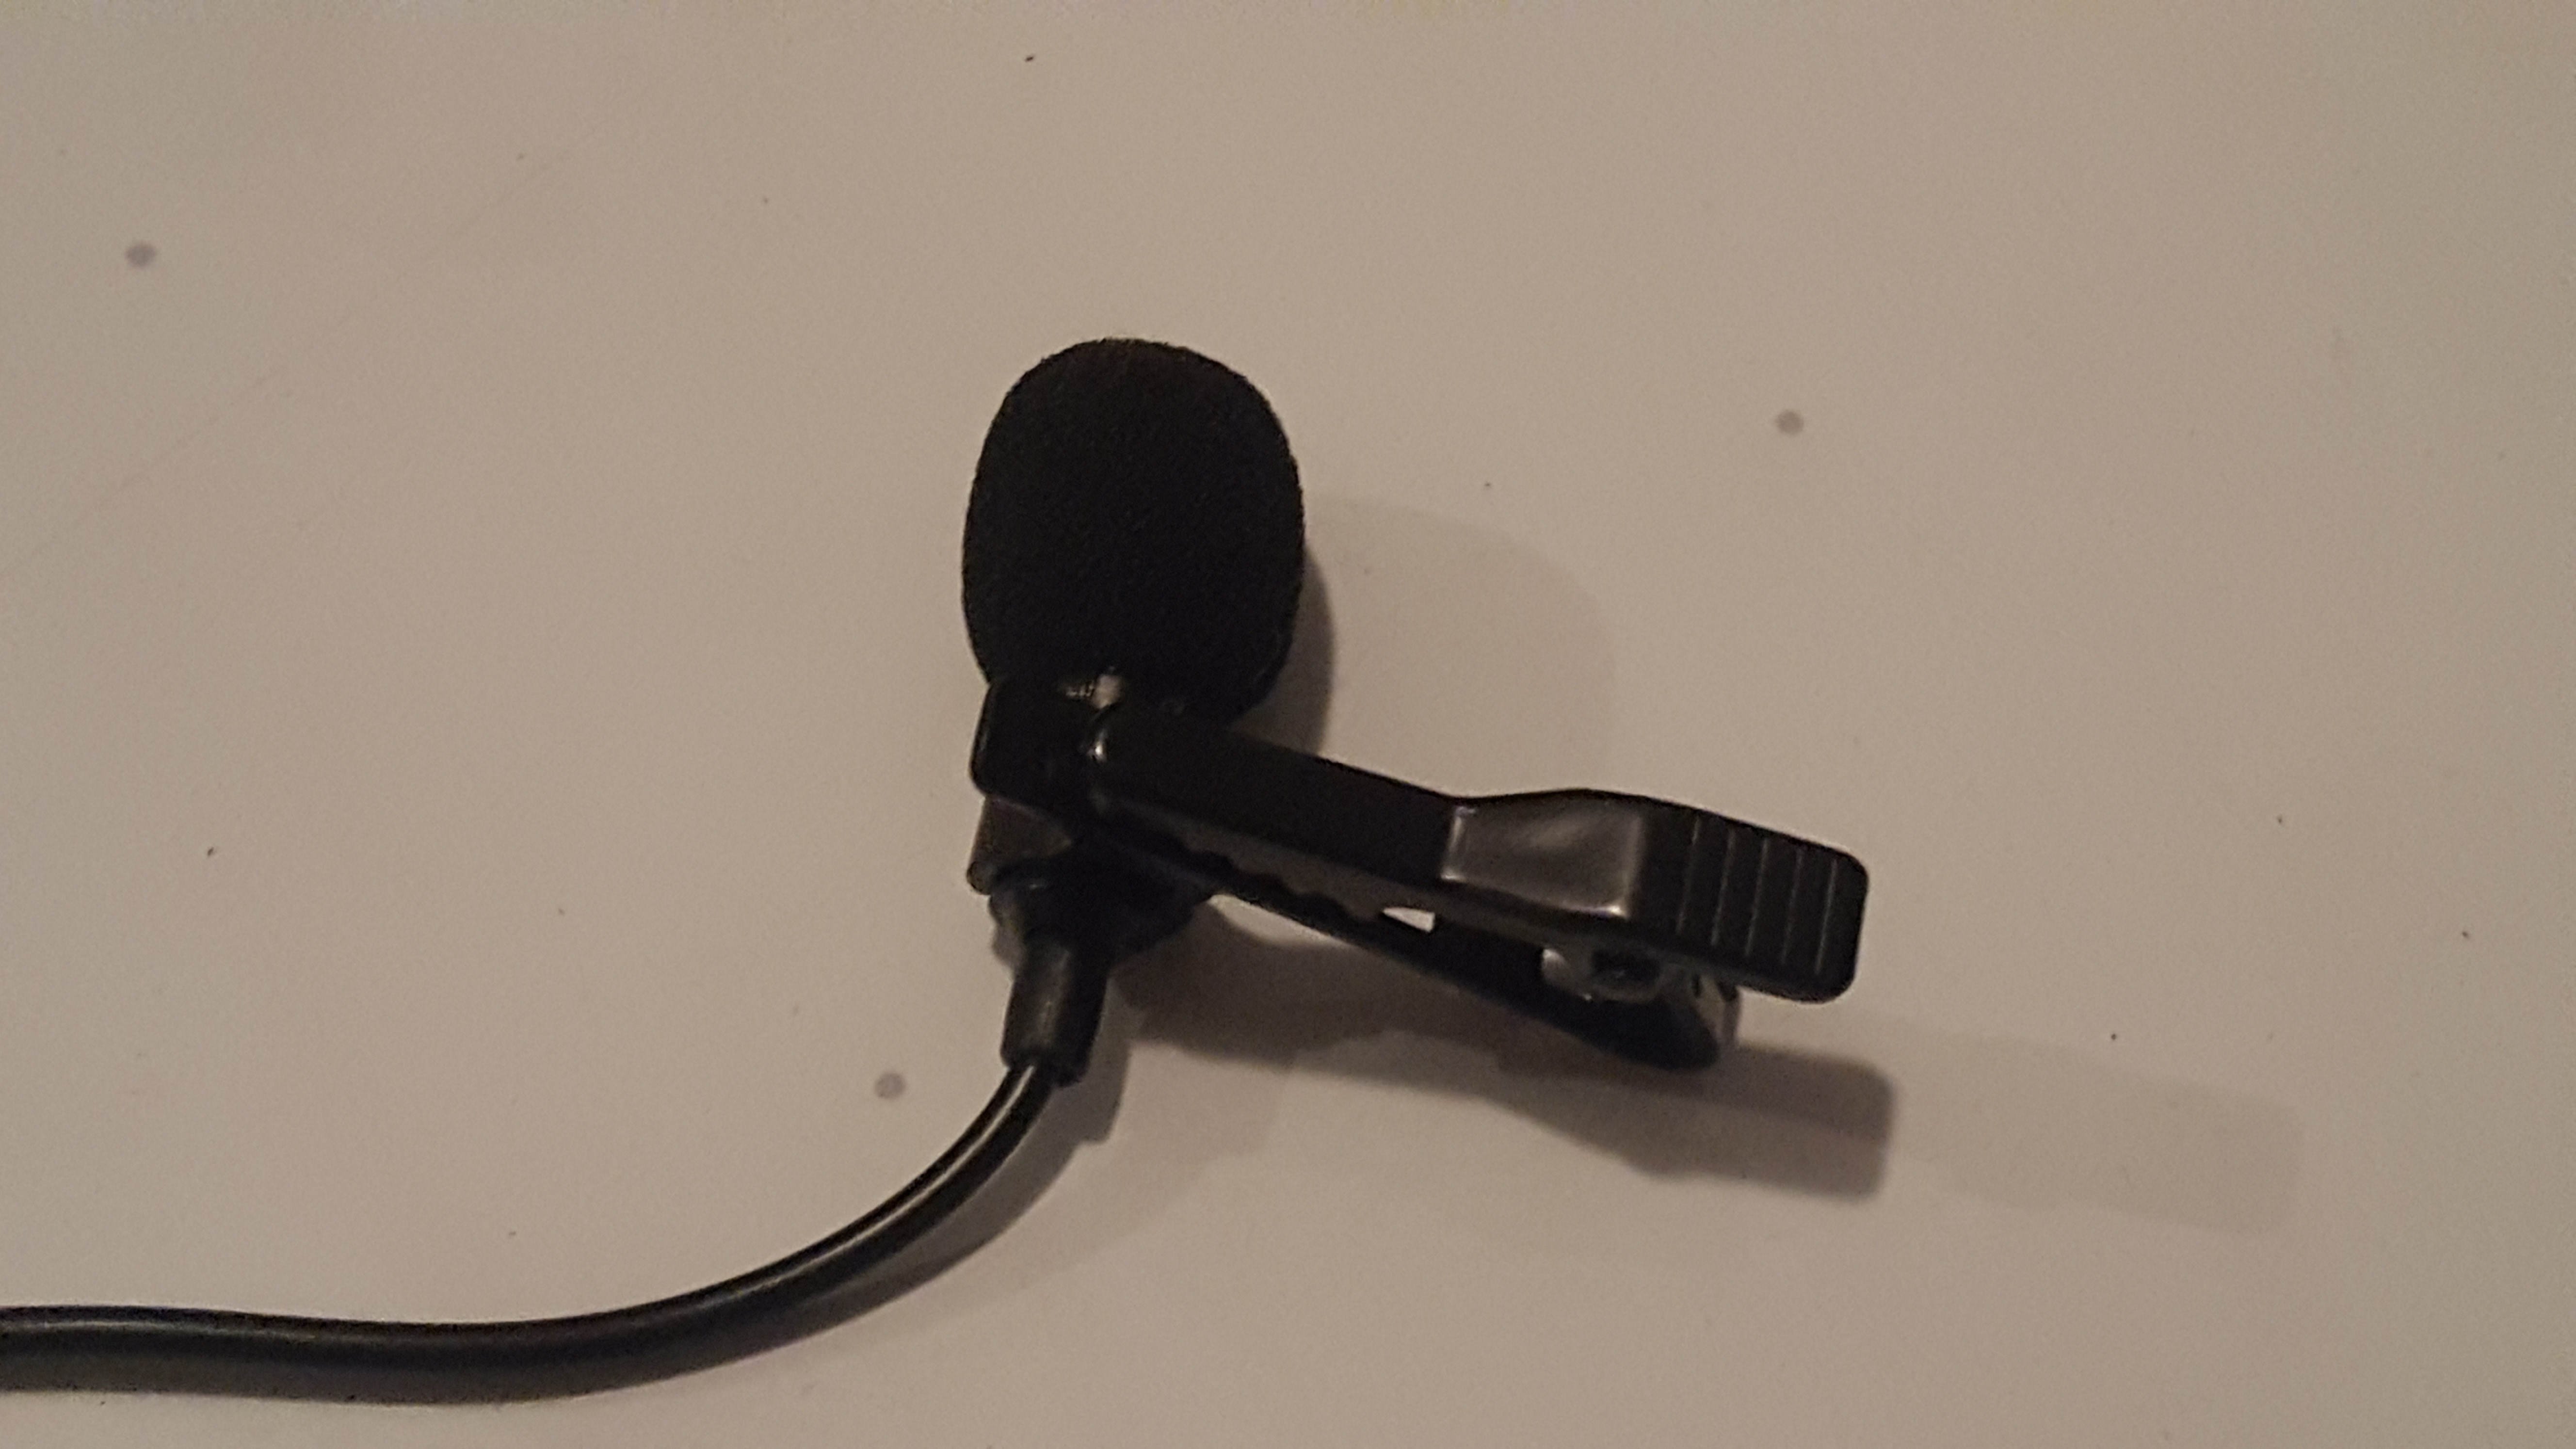 Purple Panda Lavalier Microphone Kit – Purple Panda Technologies